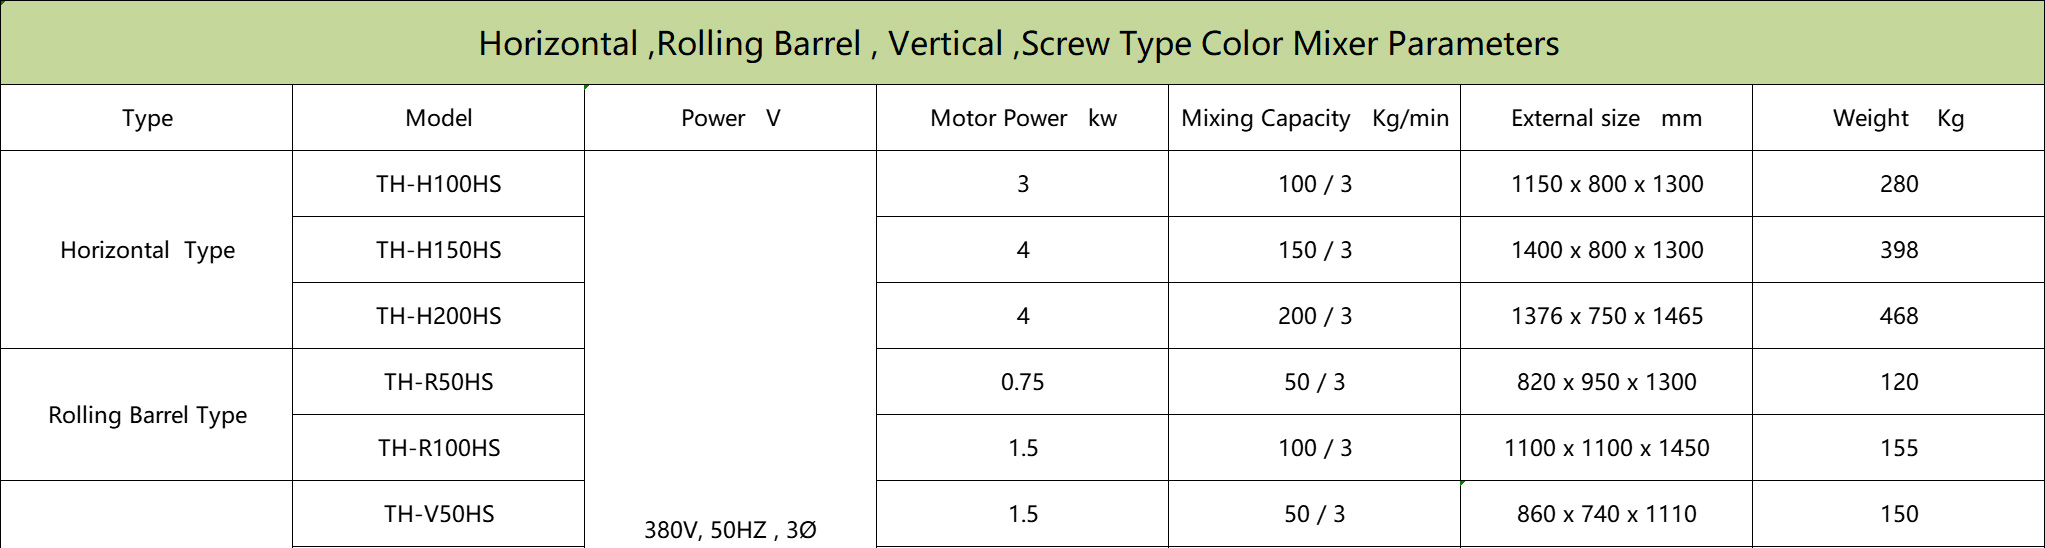 Horizontal, Rolling Barrel, Vertical, Screw Type Color Mixer Parameters